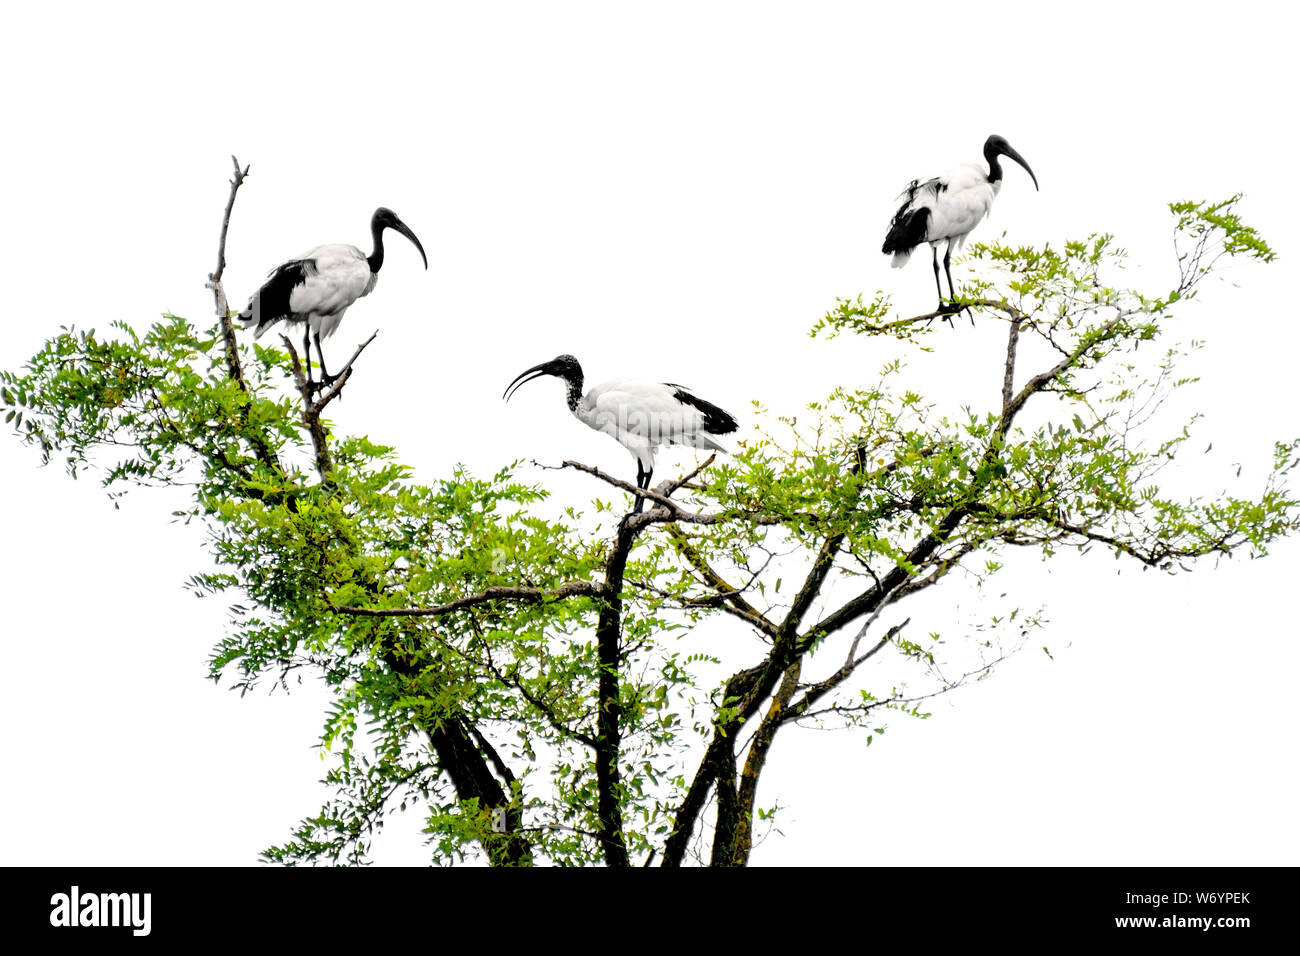 Three ibis birds standing over a tree Stock Photo